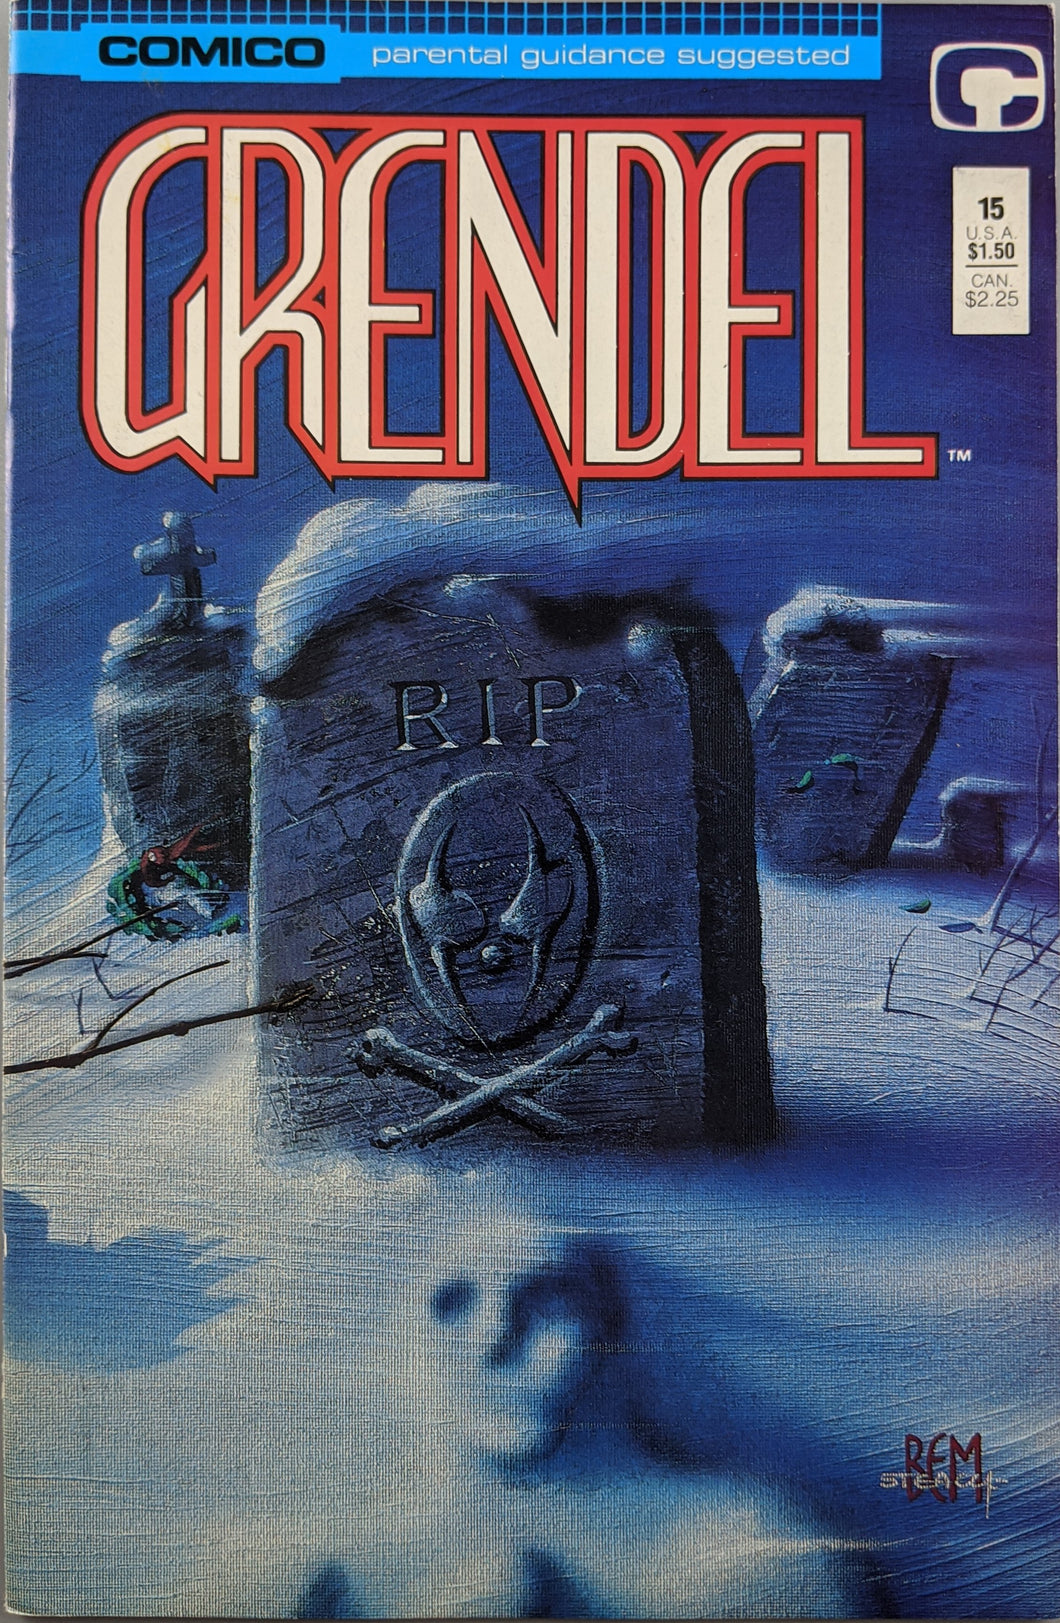 Grendel #15 Comic Book Cover Art